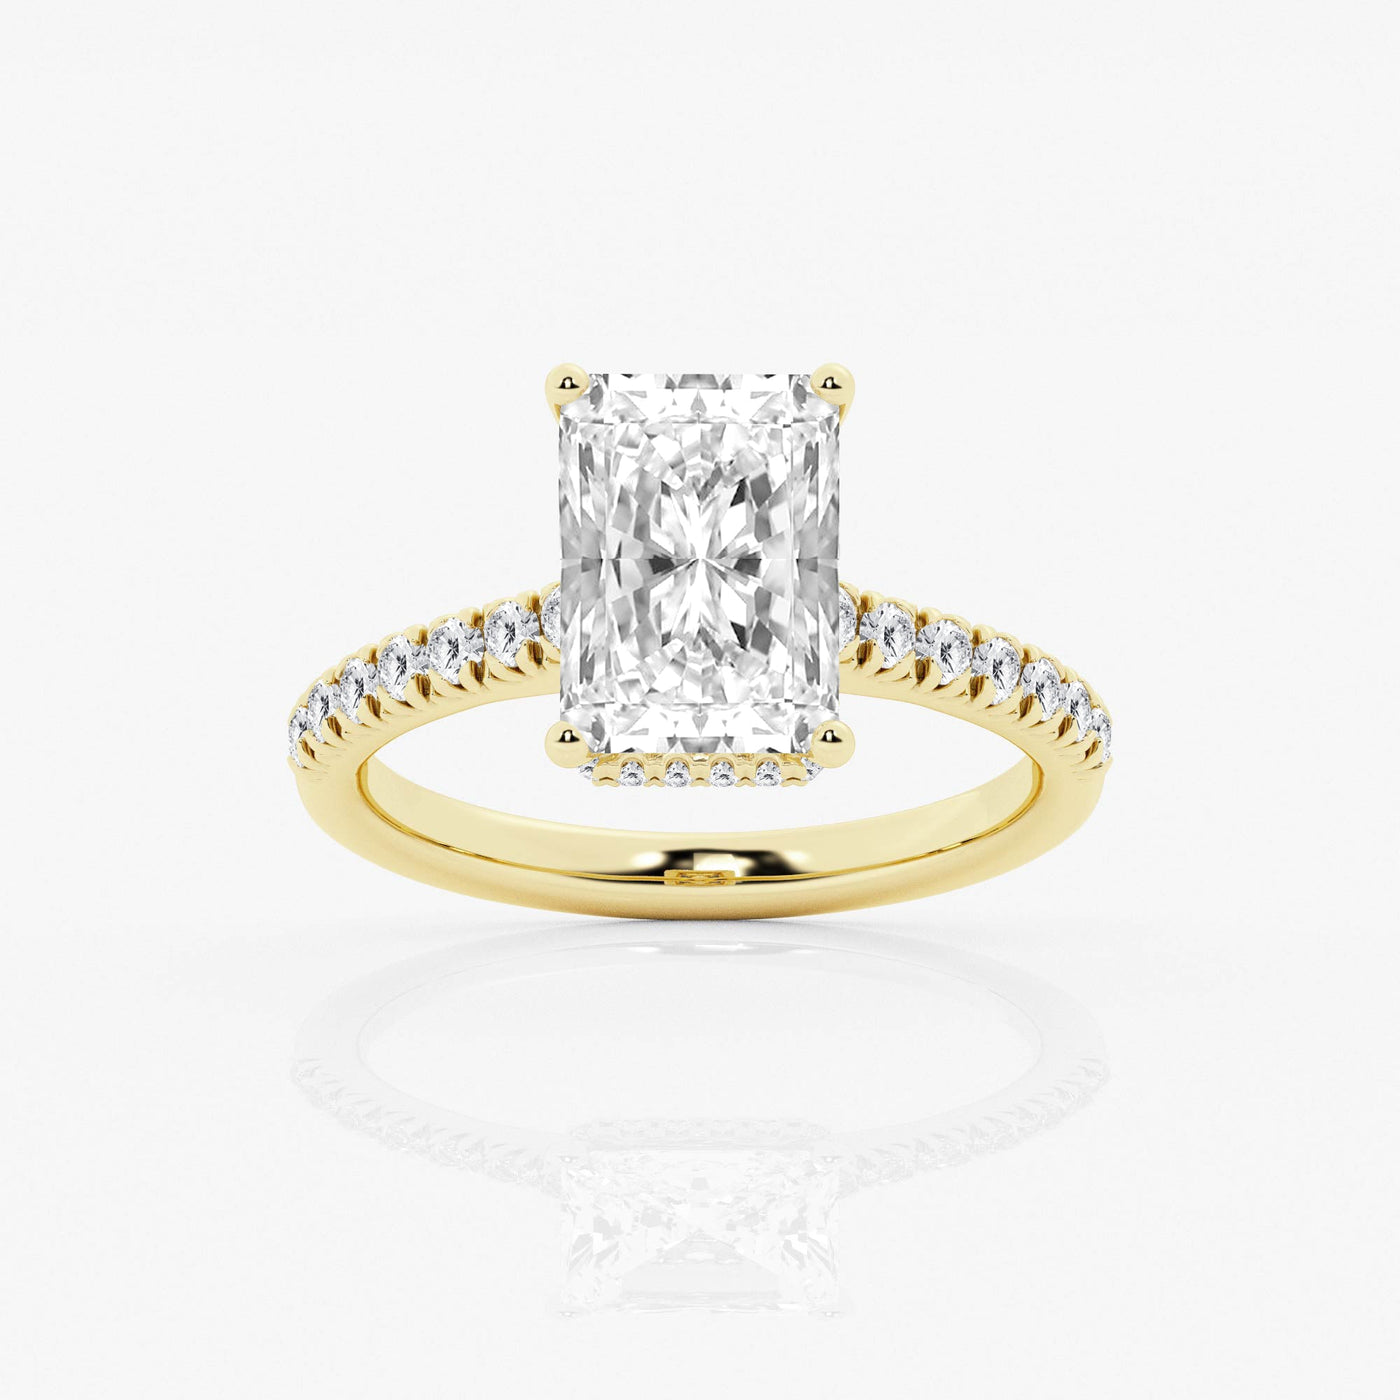 _main_image@SKU:LGDTXR06650T300GY4~#carat_3.48#diamond-quality_fg,-vs2+#metal_18k-yellow-gold